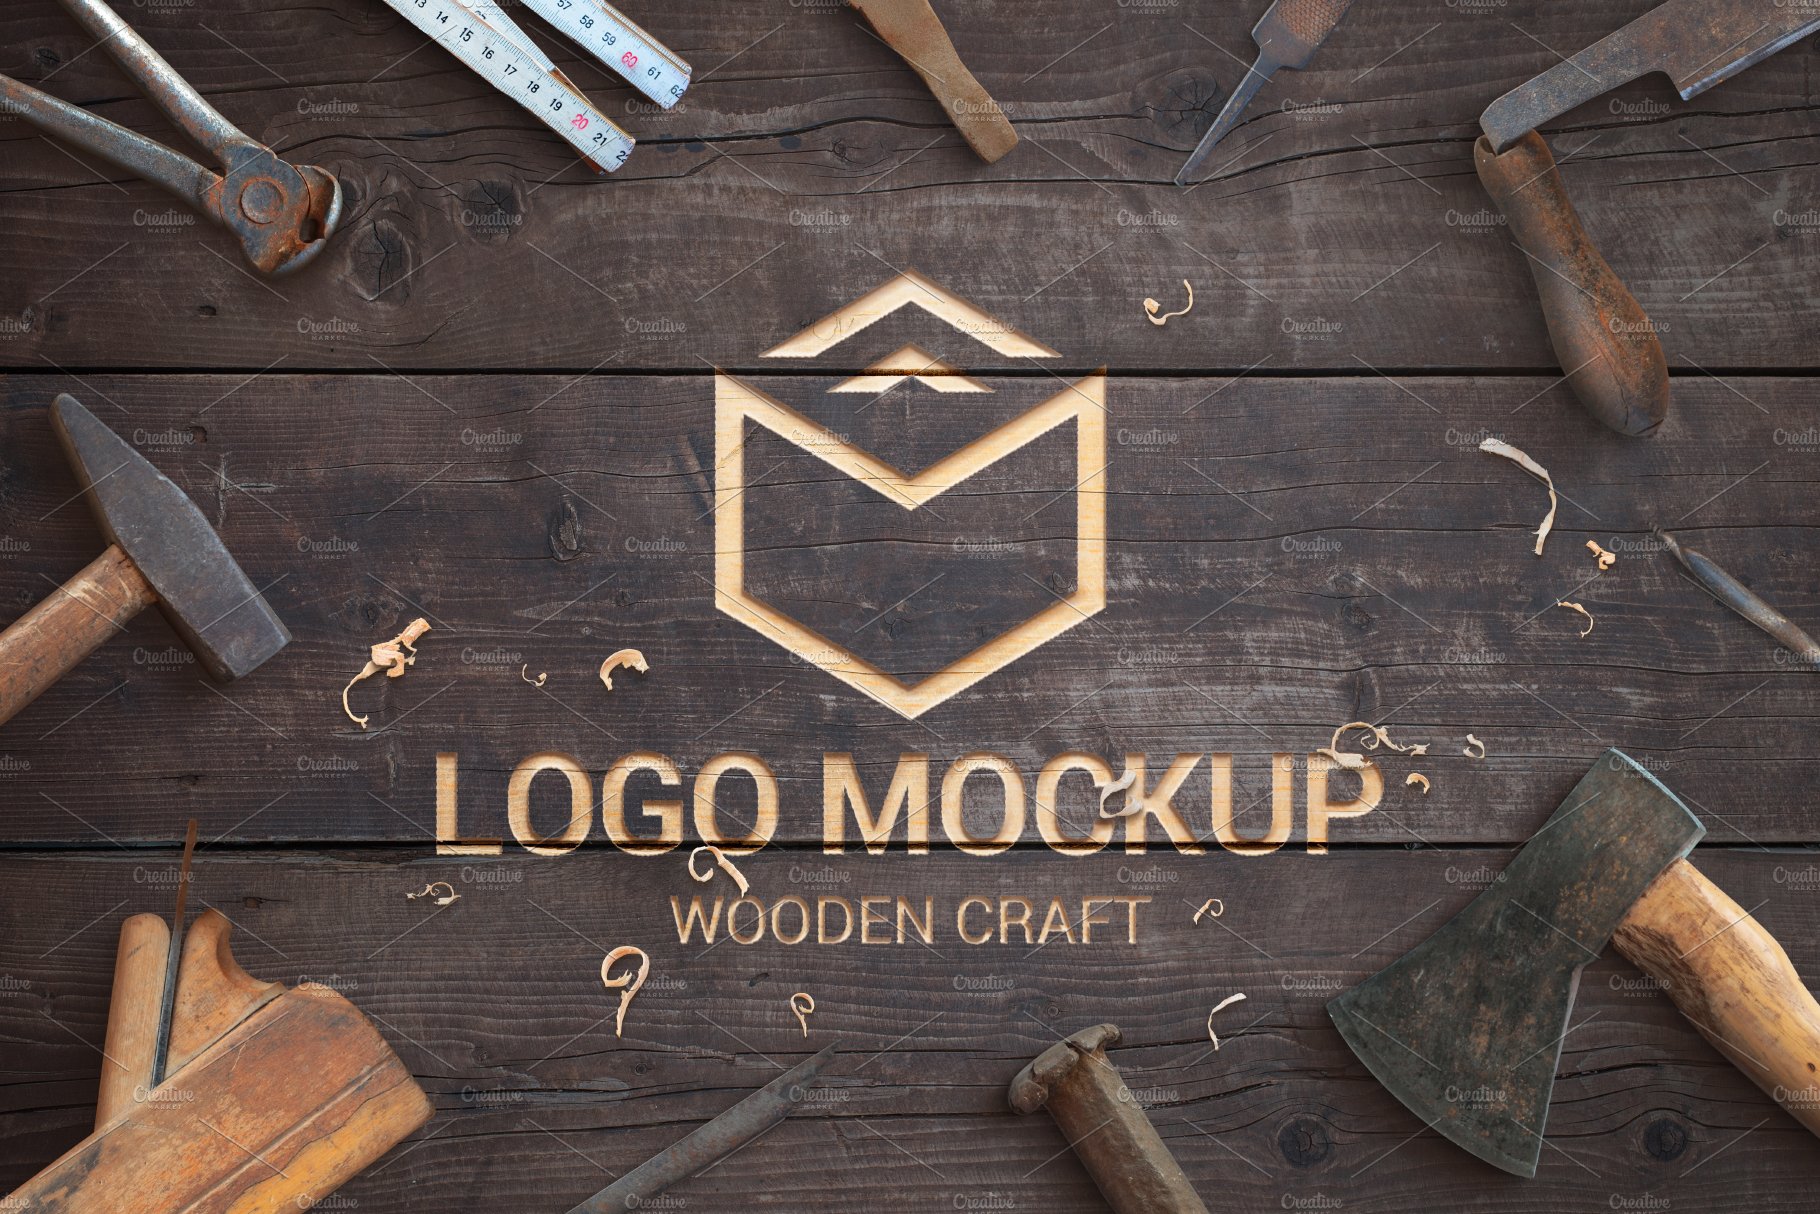 Wooden craft logo mockup creator cover image.